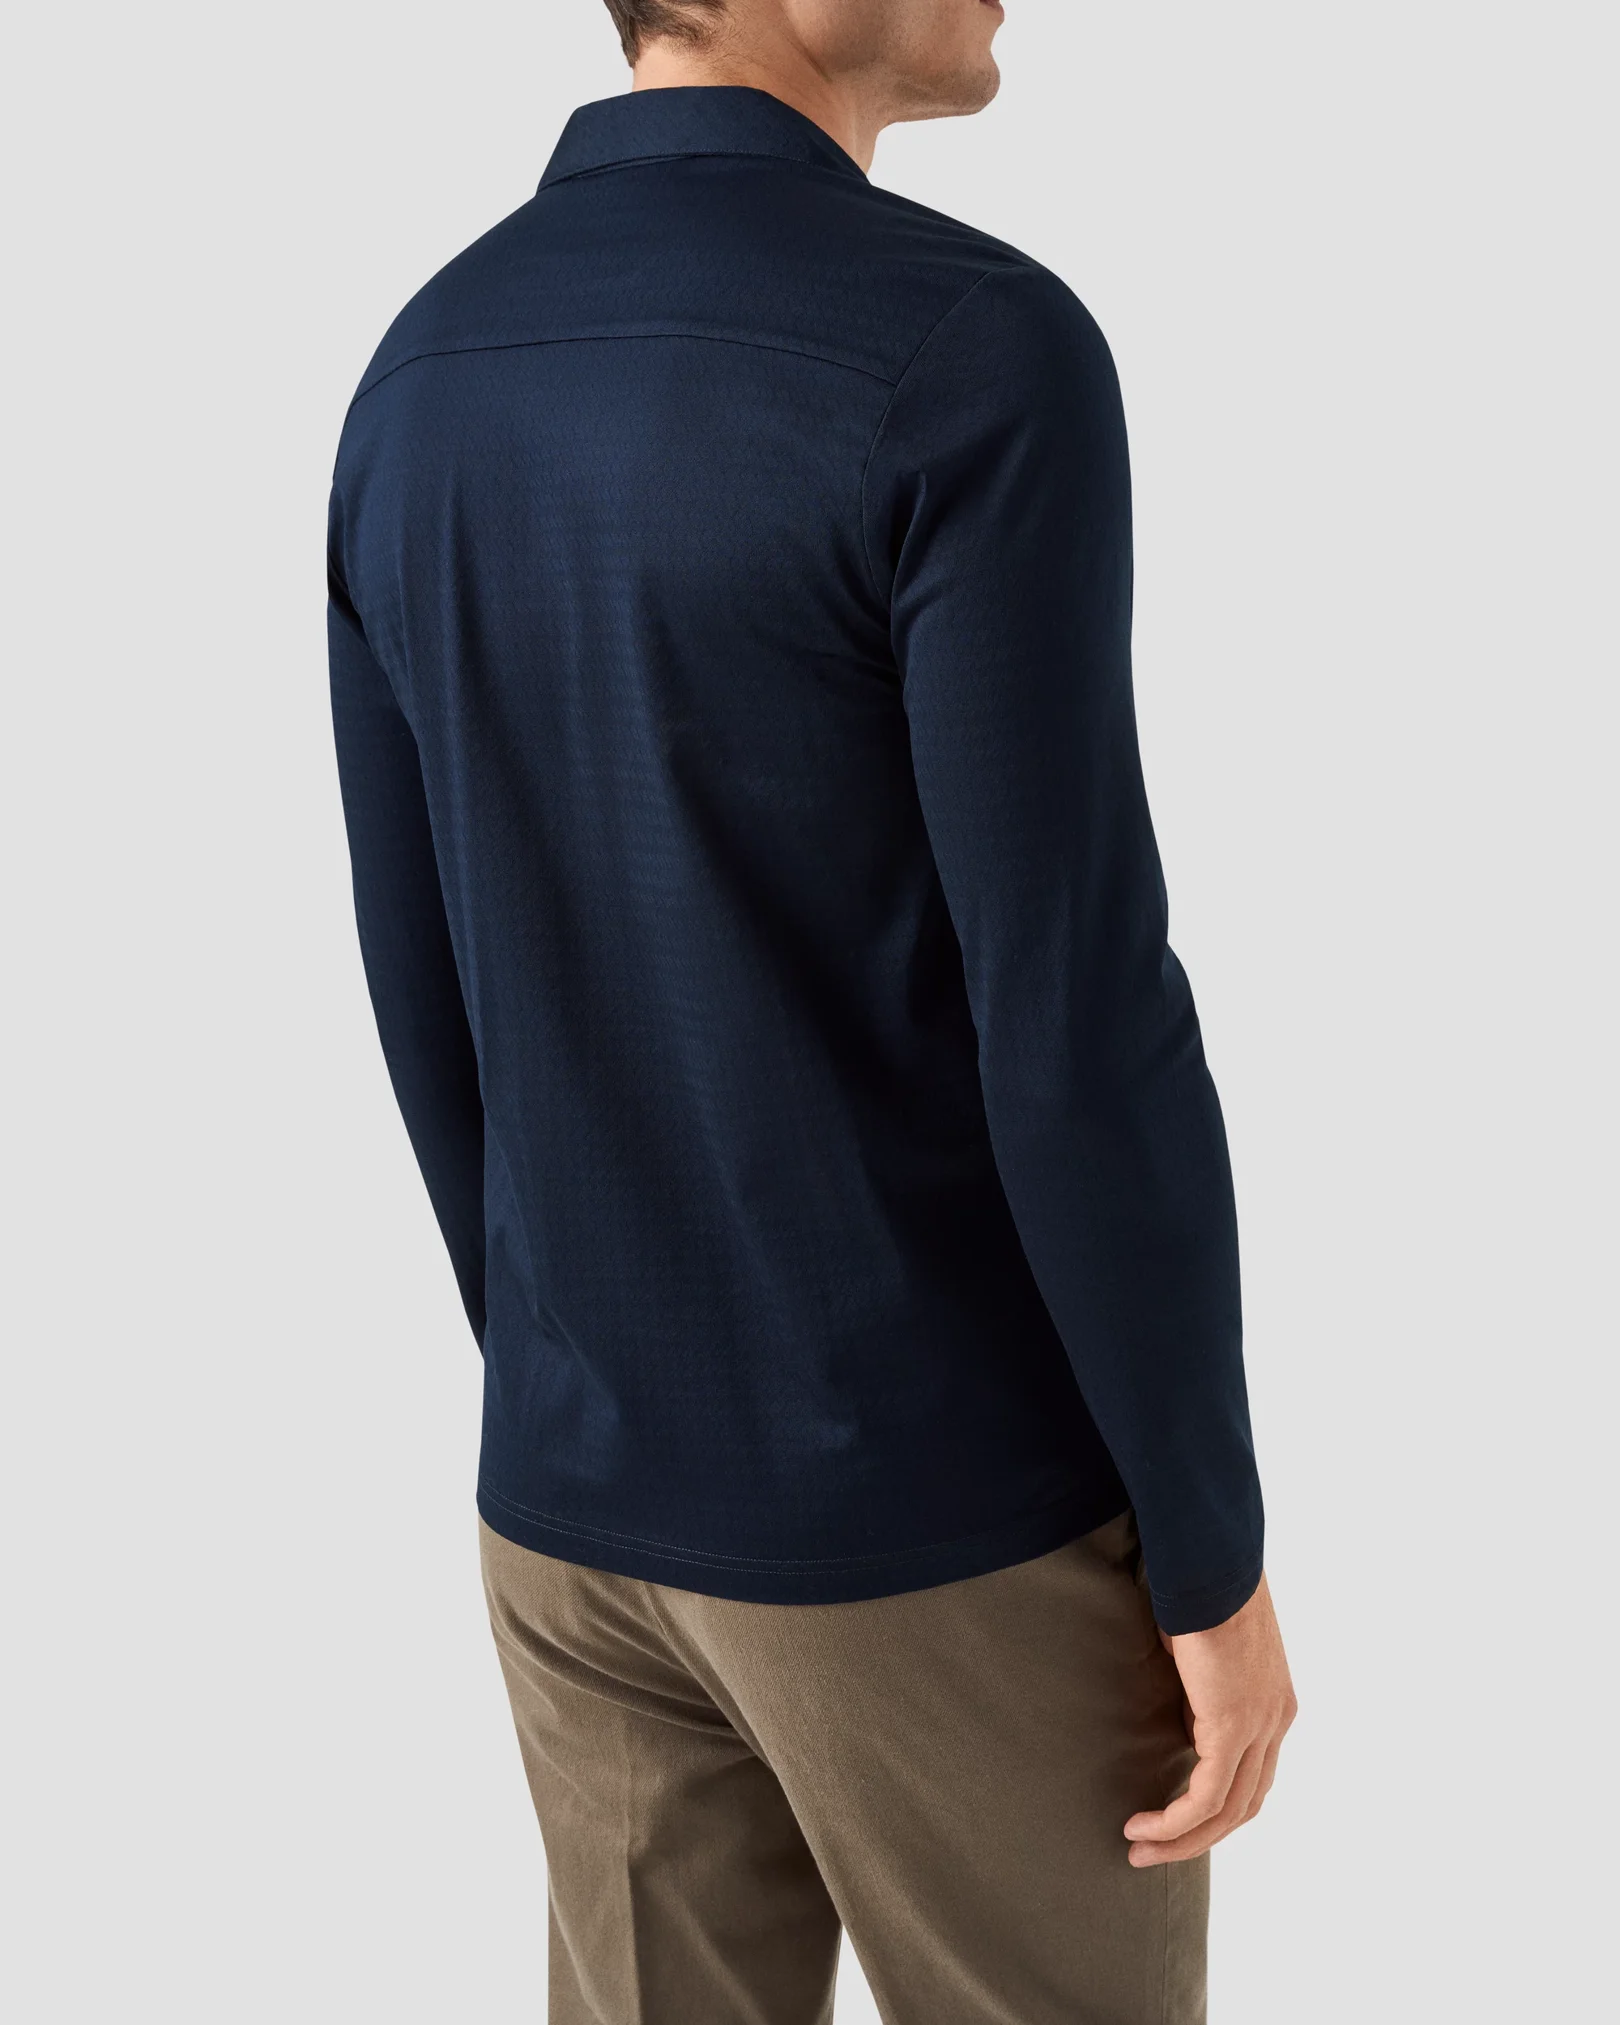 Eton - navy blue open collar long sleeve regular fit